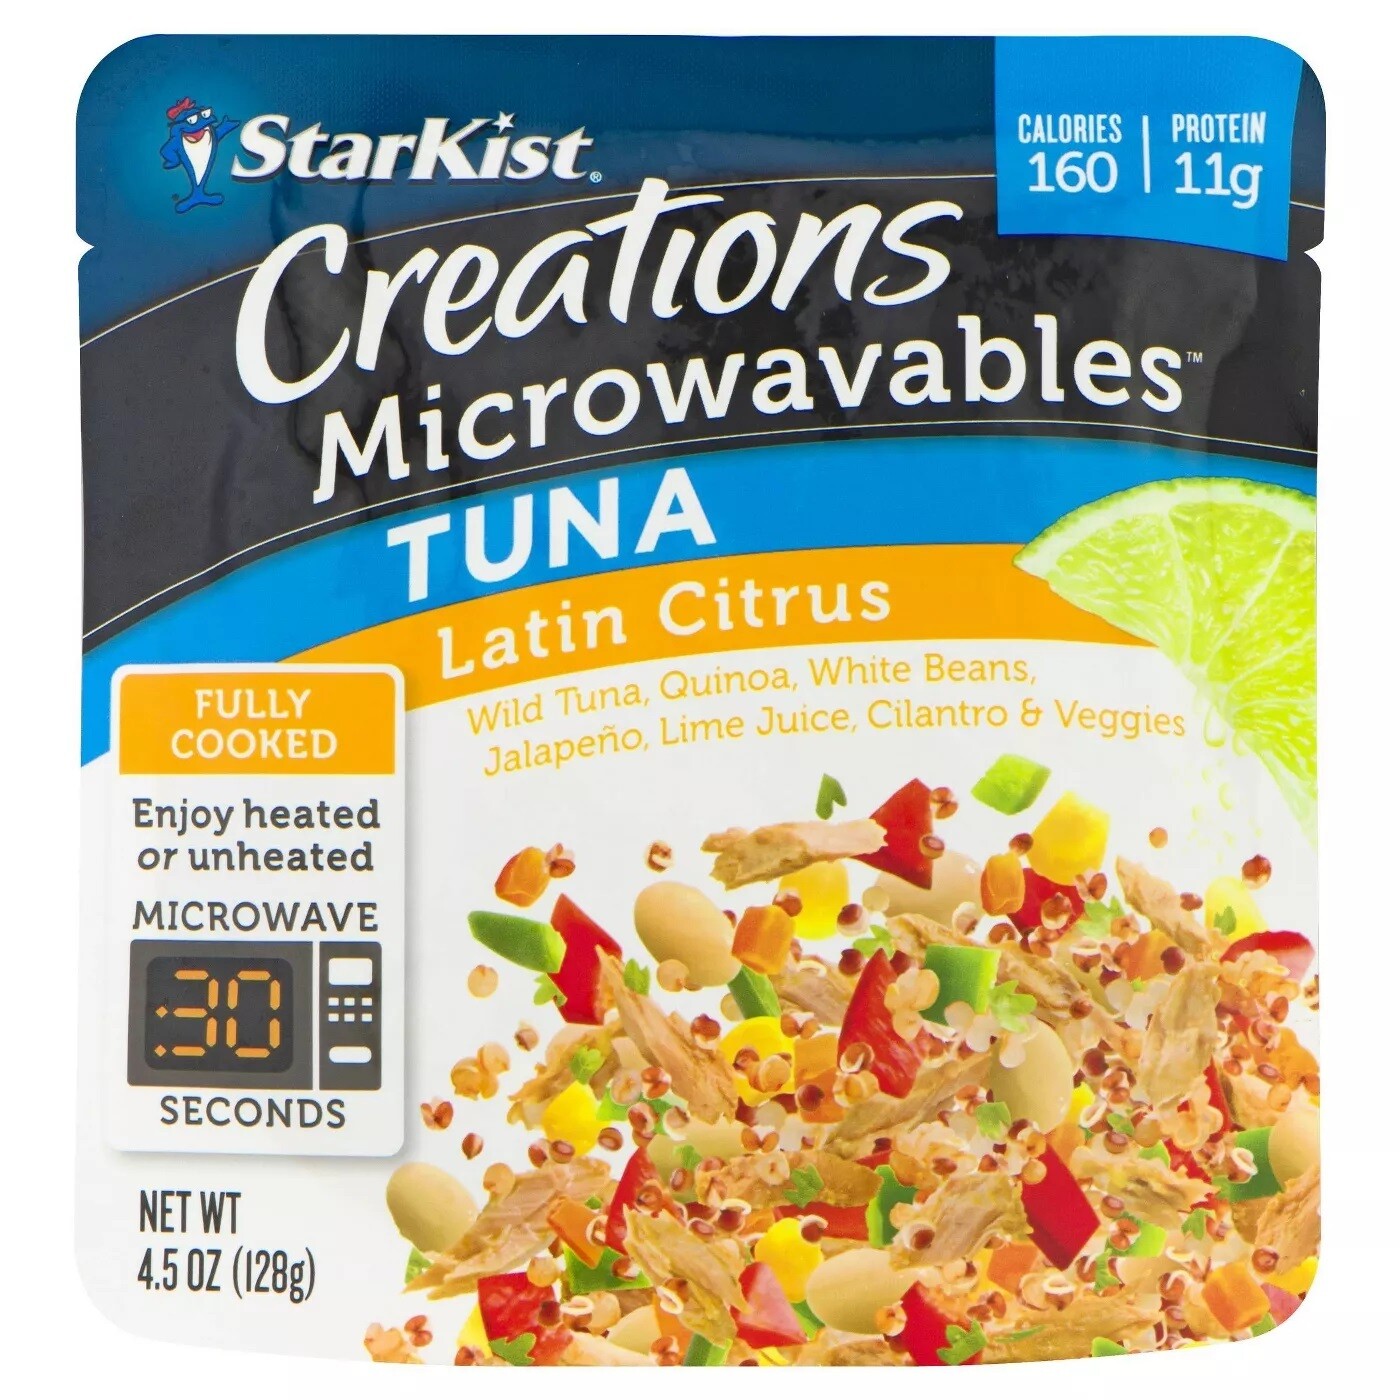 Starkist Creations Microwavables - Latin Citrus